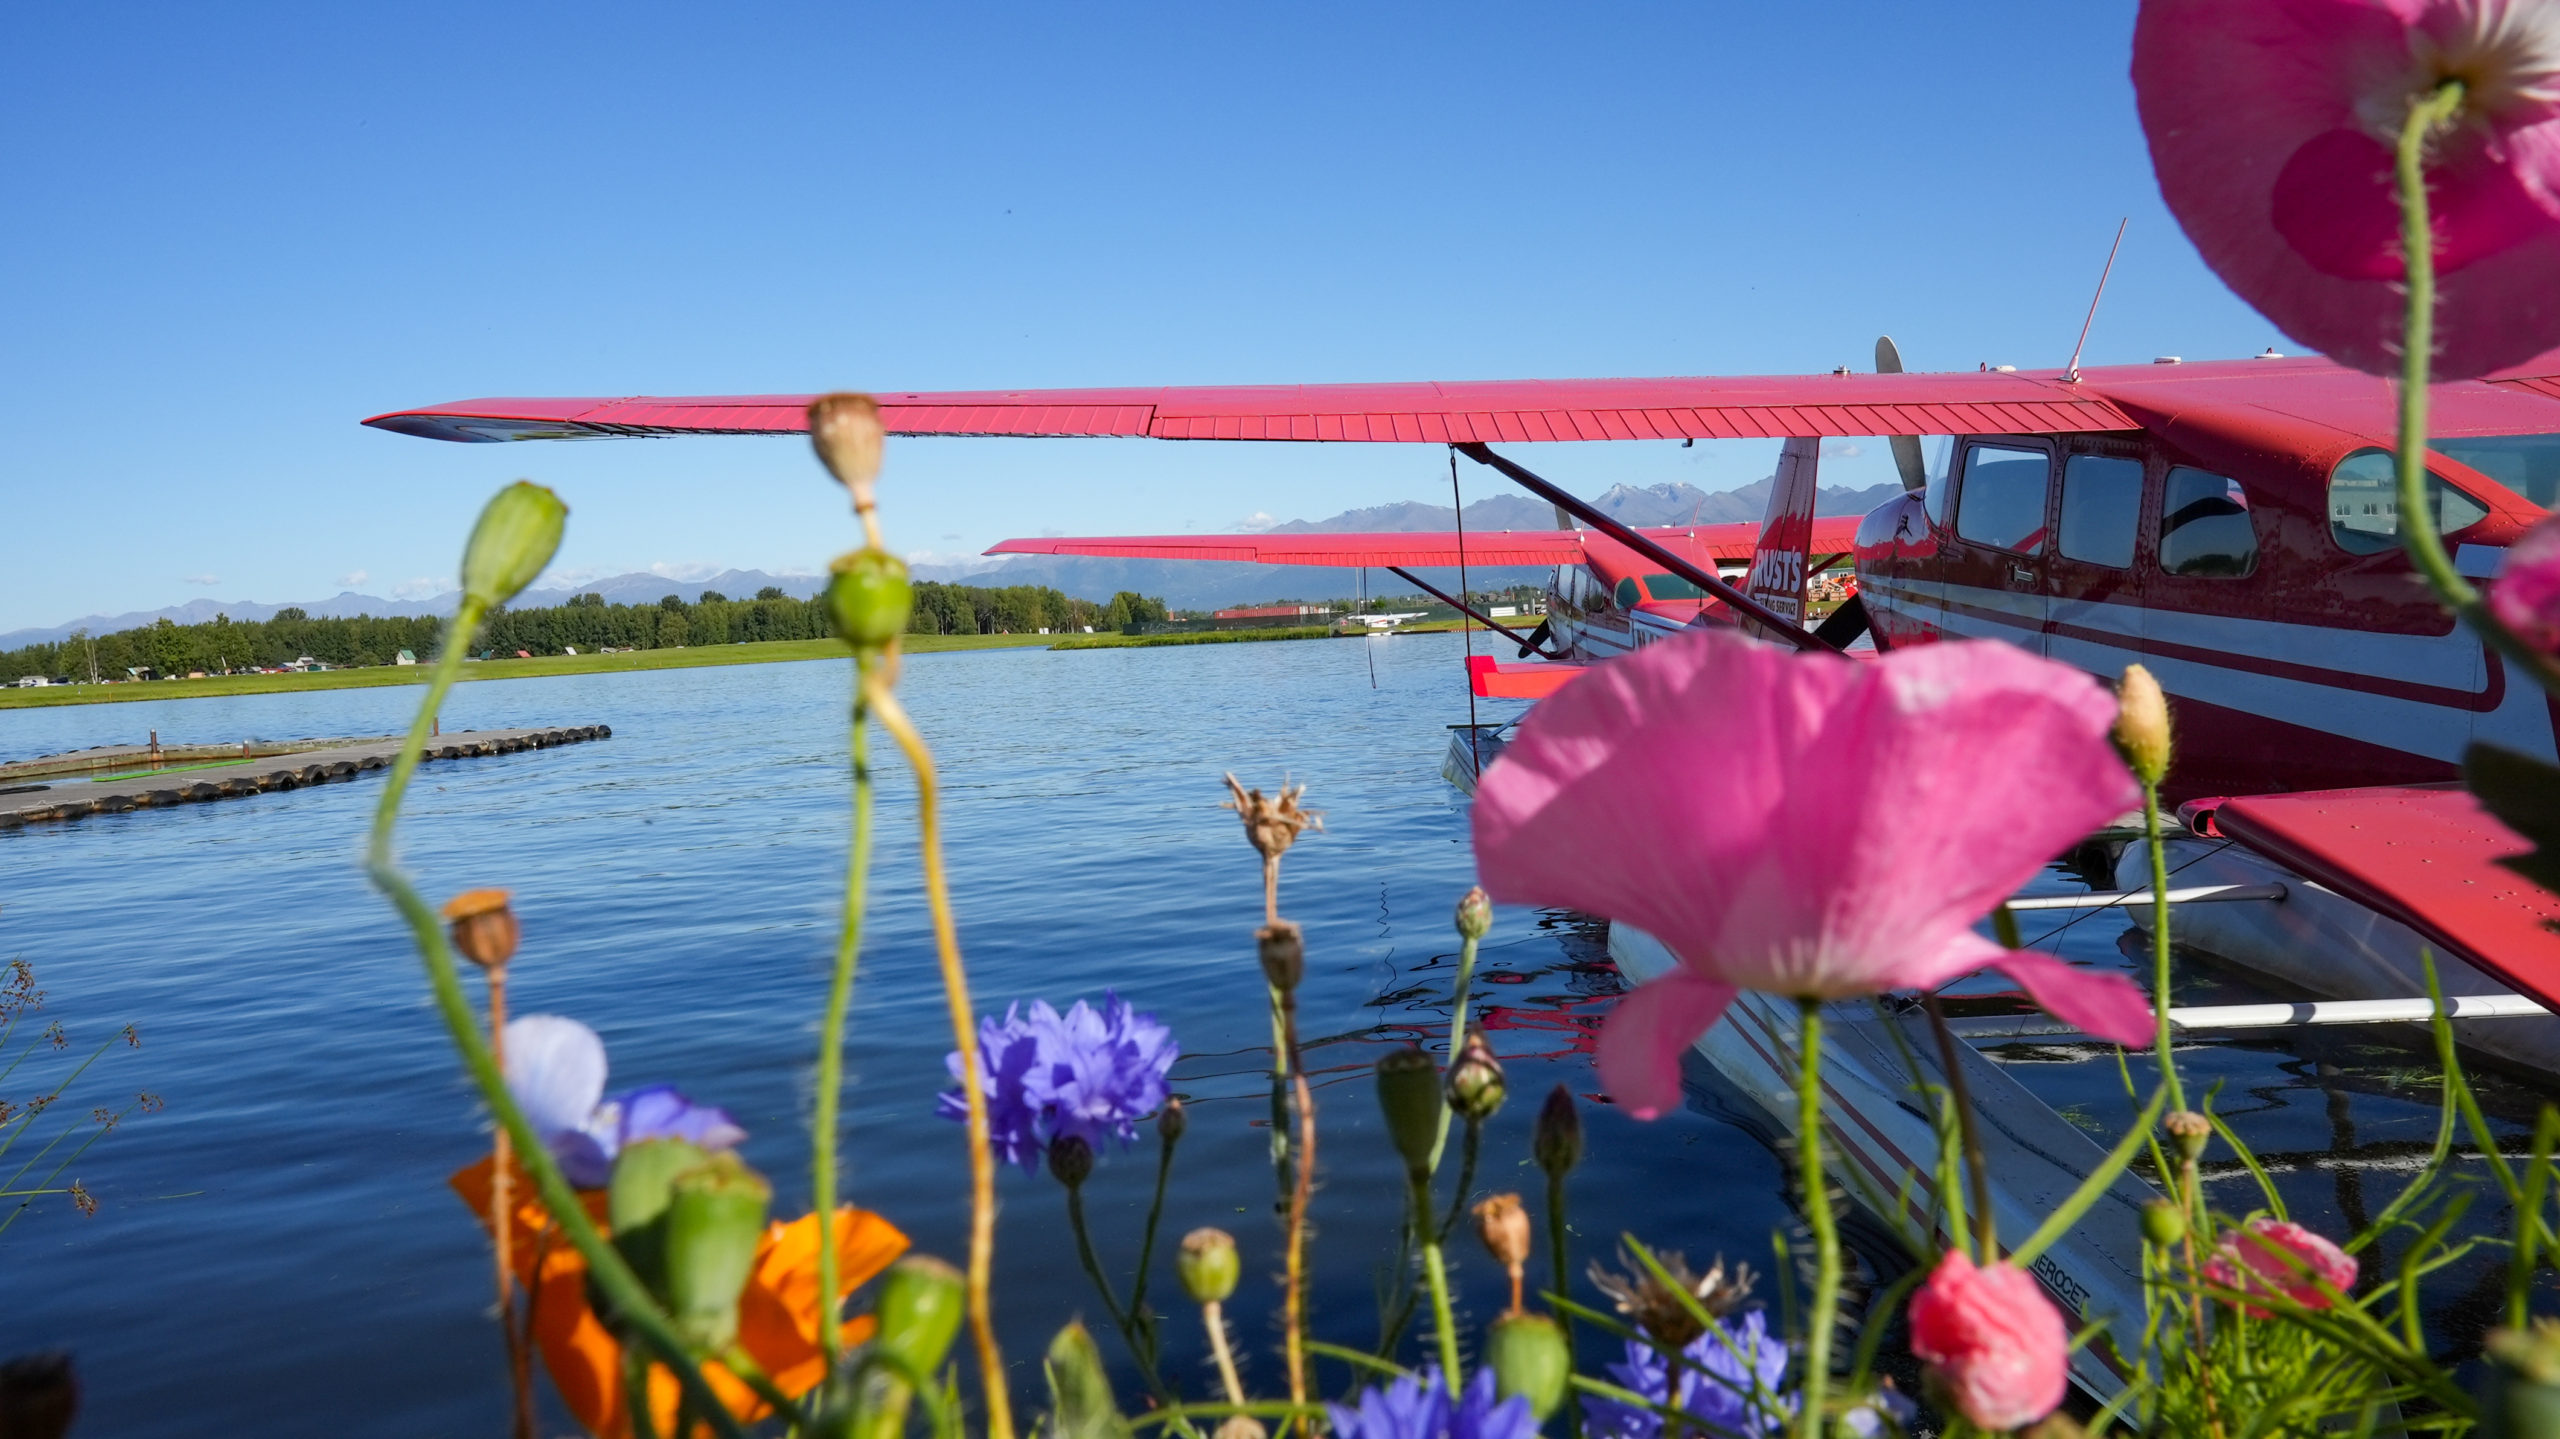 Seaplane behiind bright flowers anchorage alaska 